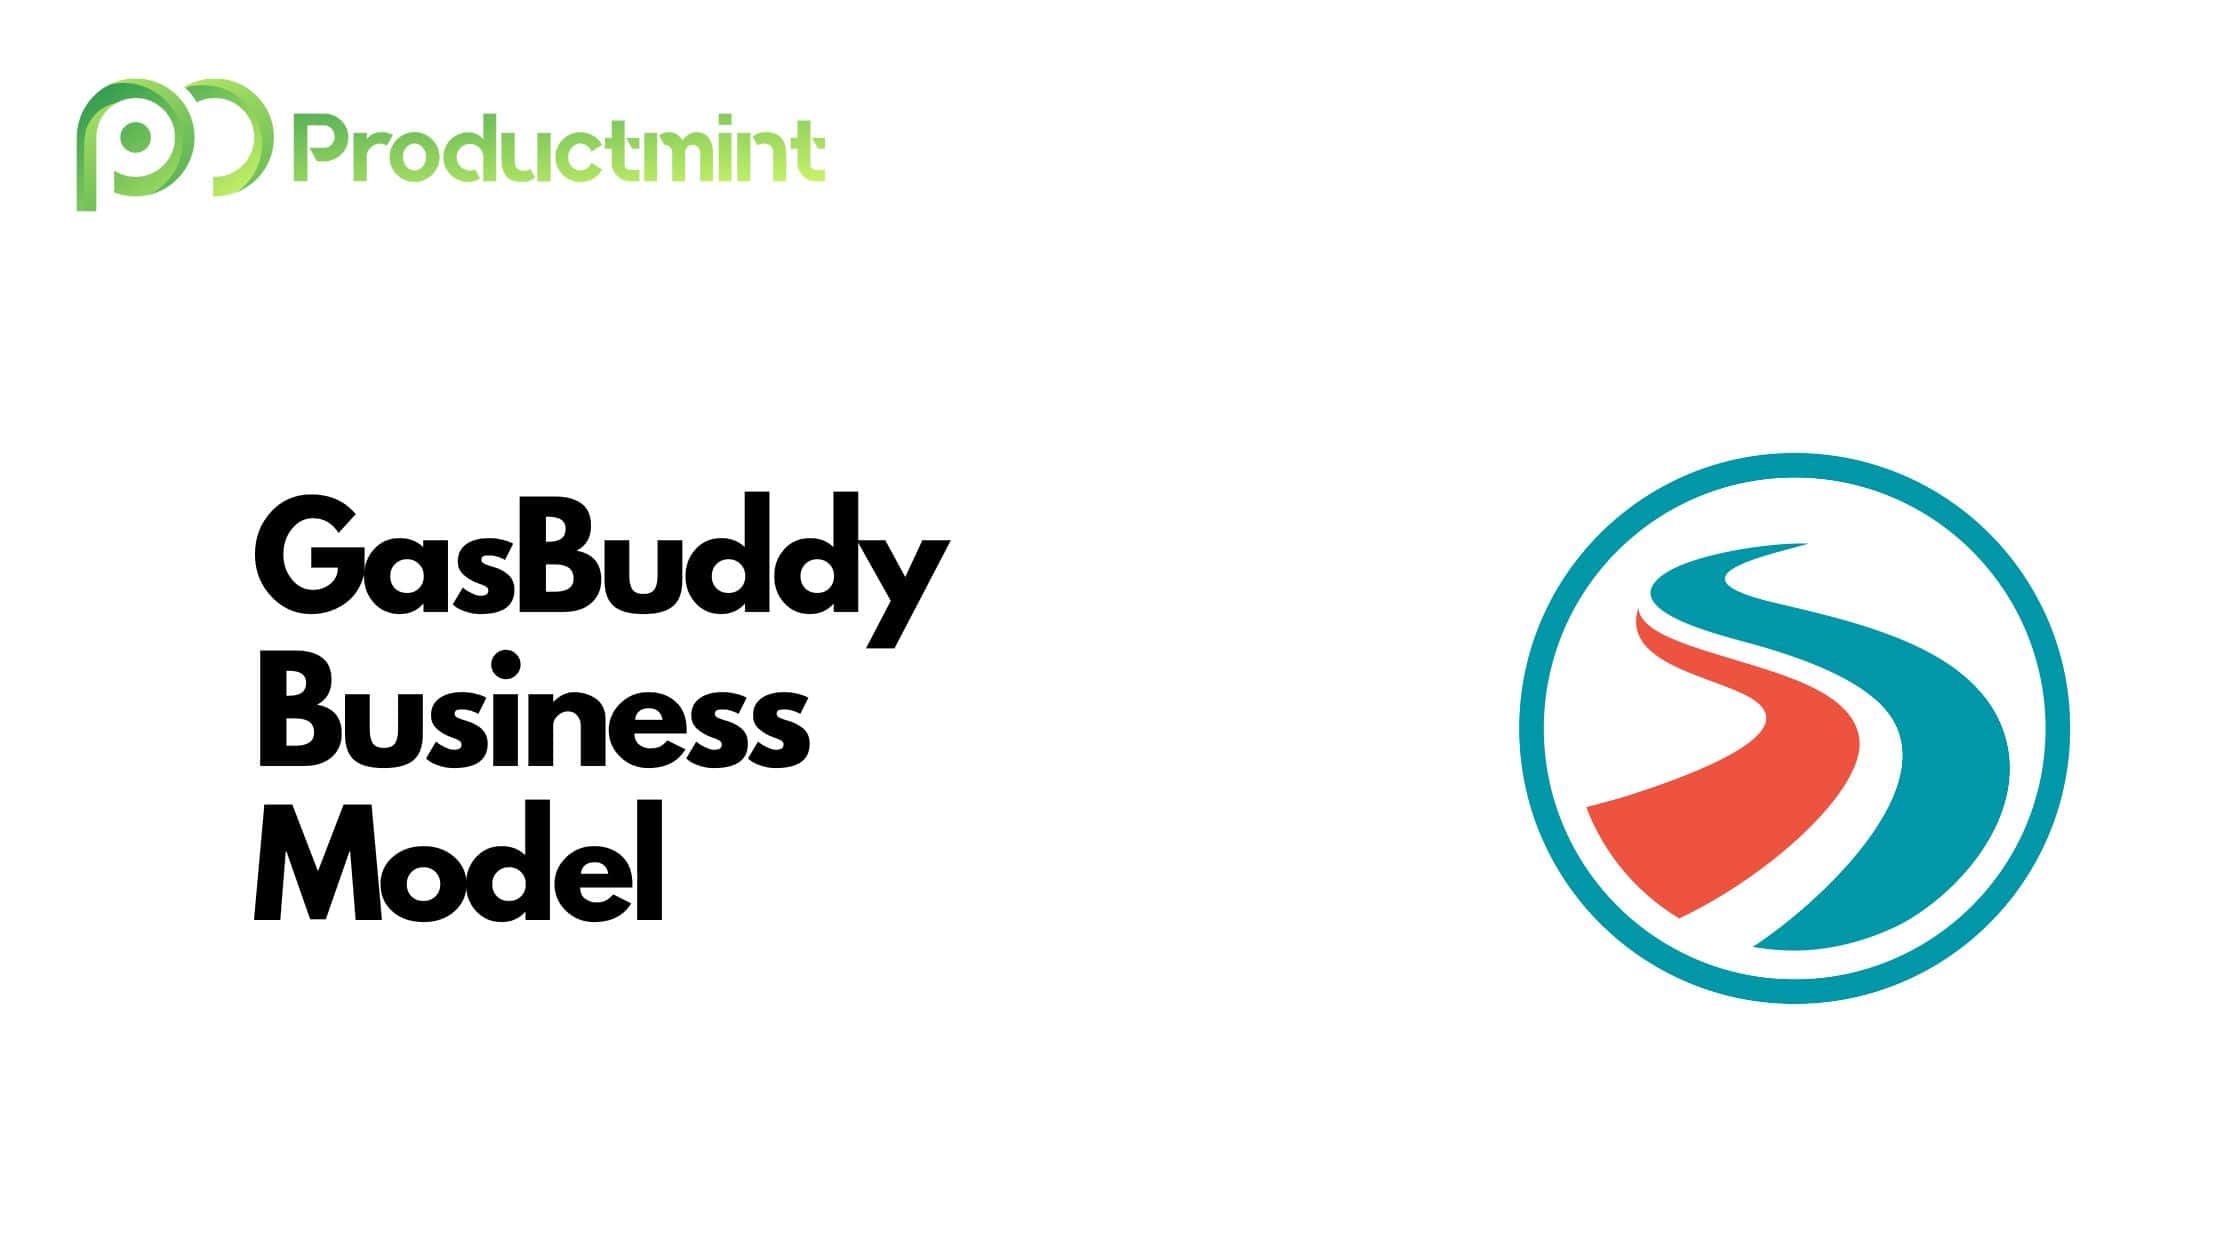 GasBuddy Business Model